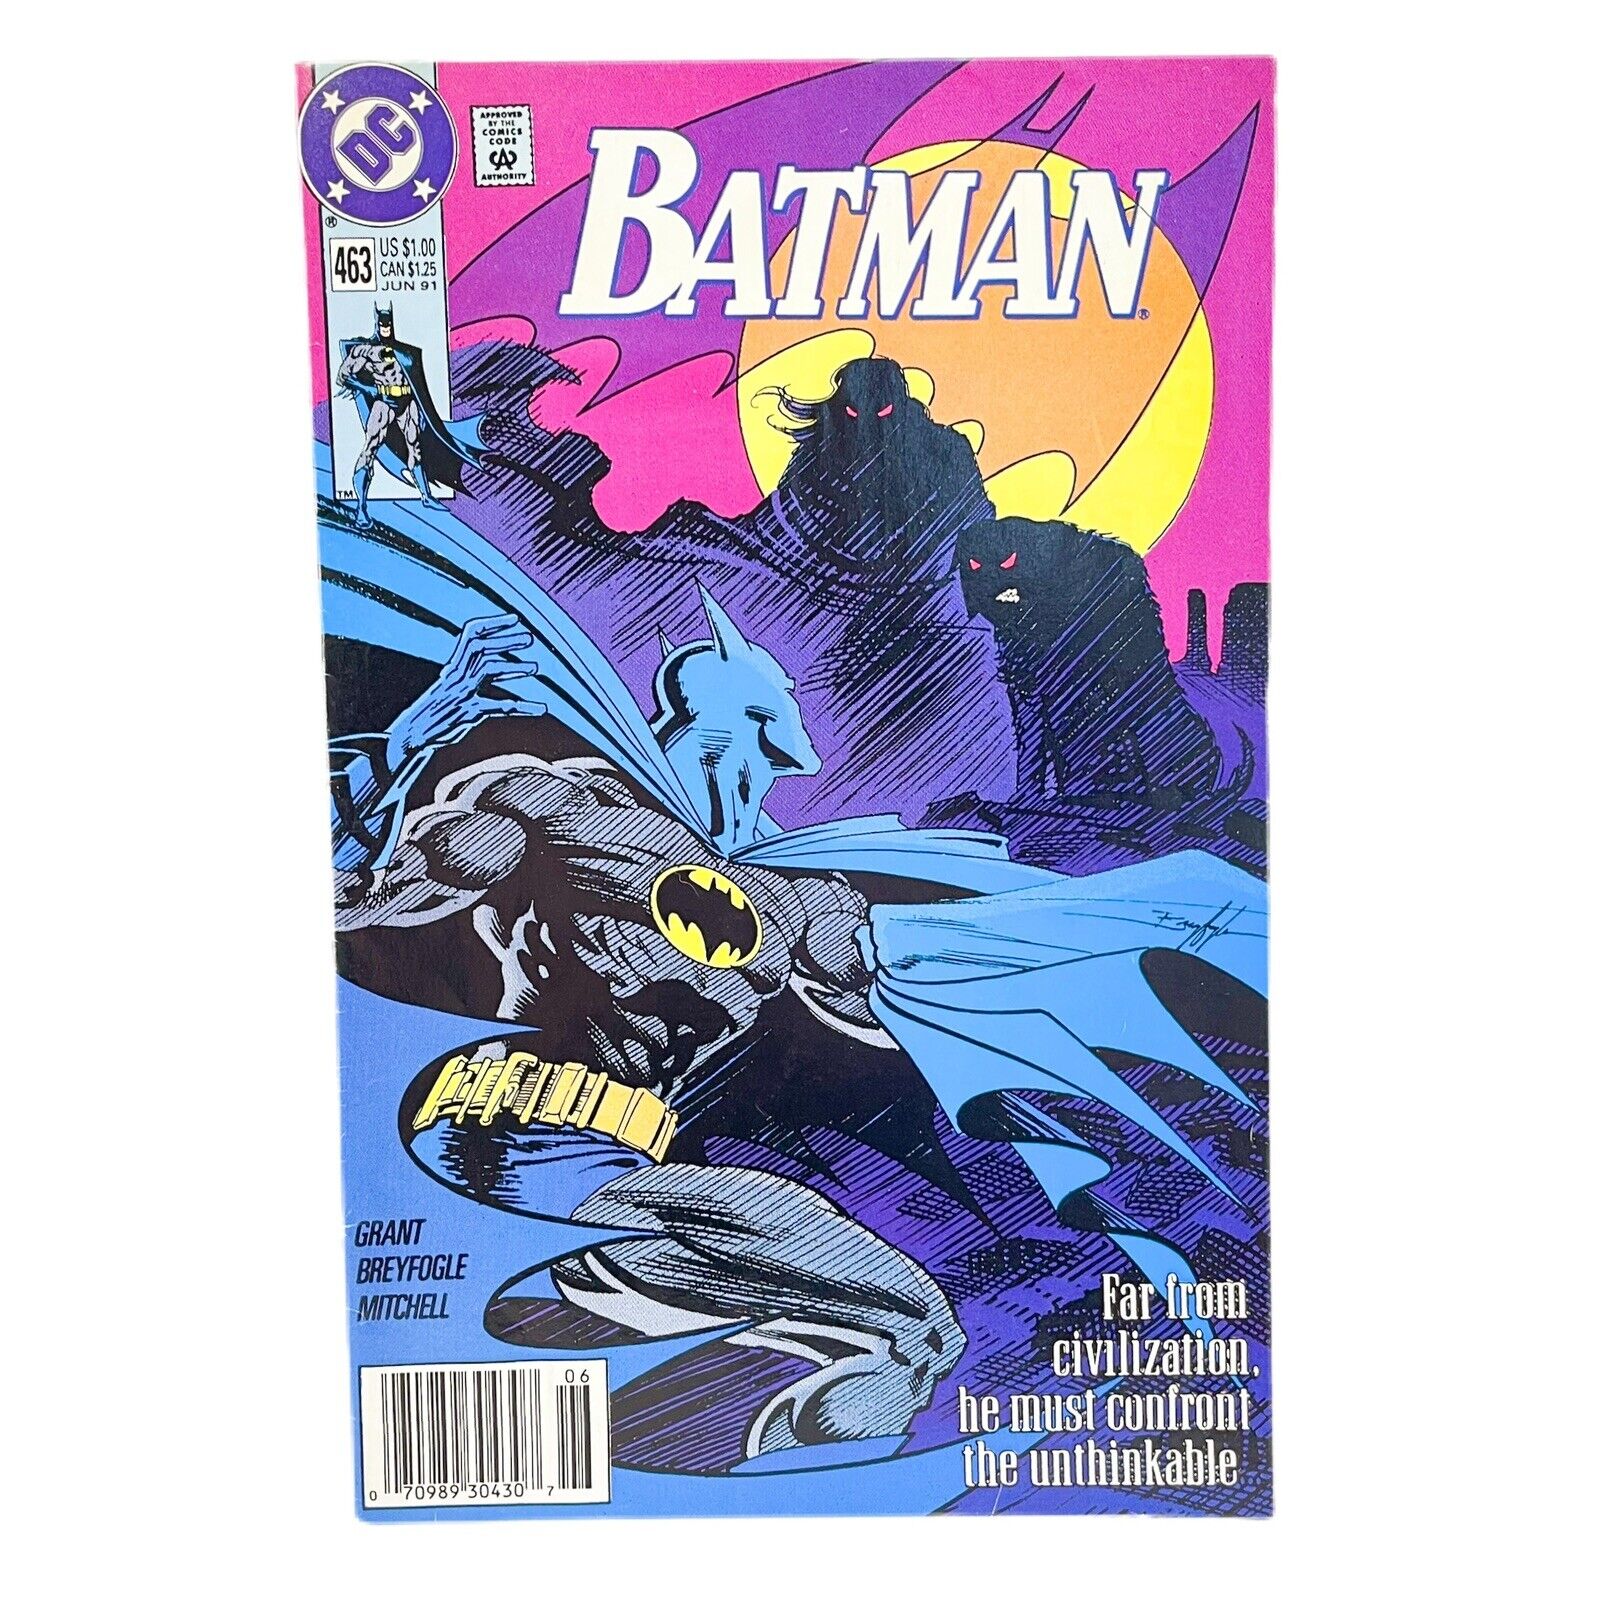 Batman #463 June 1991 DC Comics Volume 1 Newsstand Edition